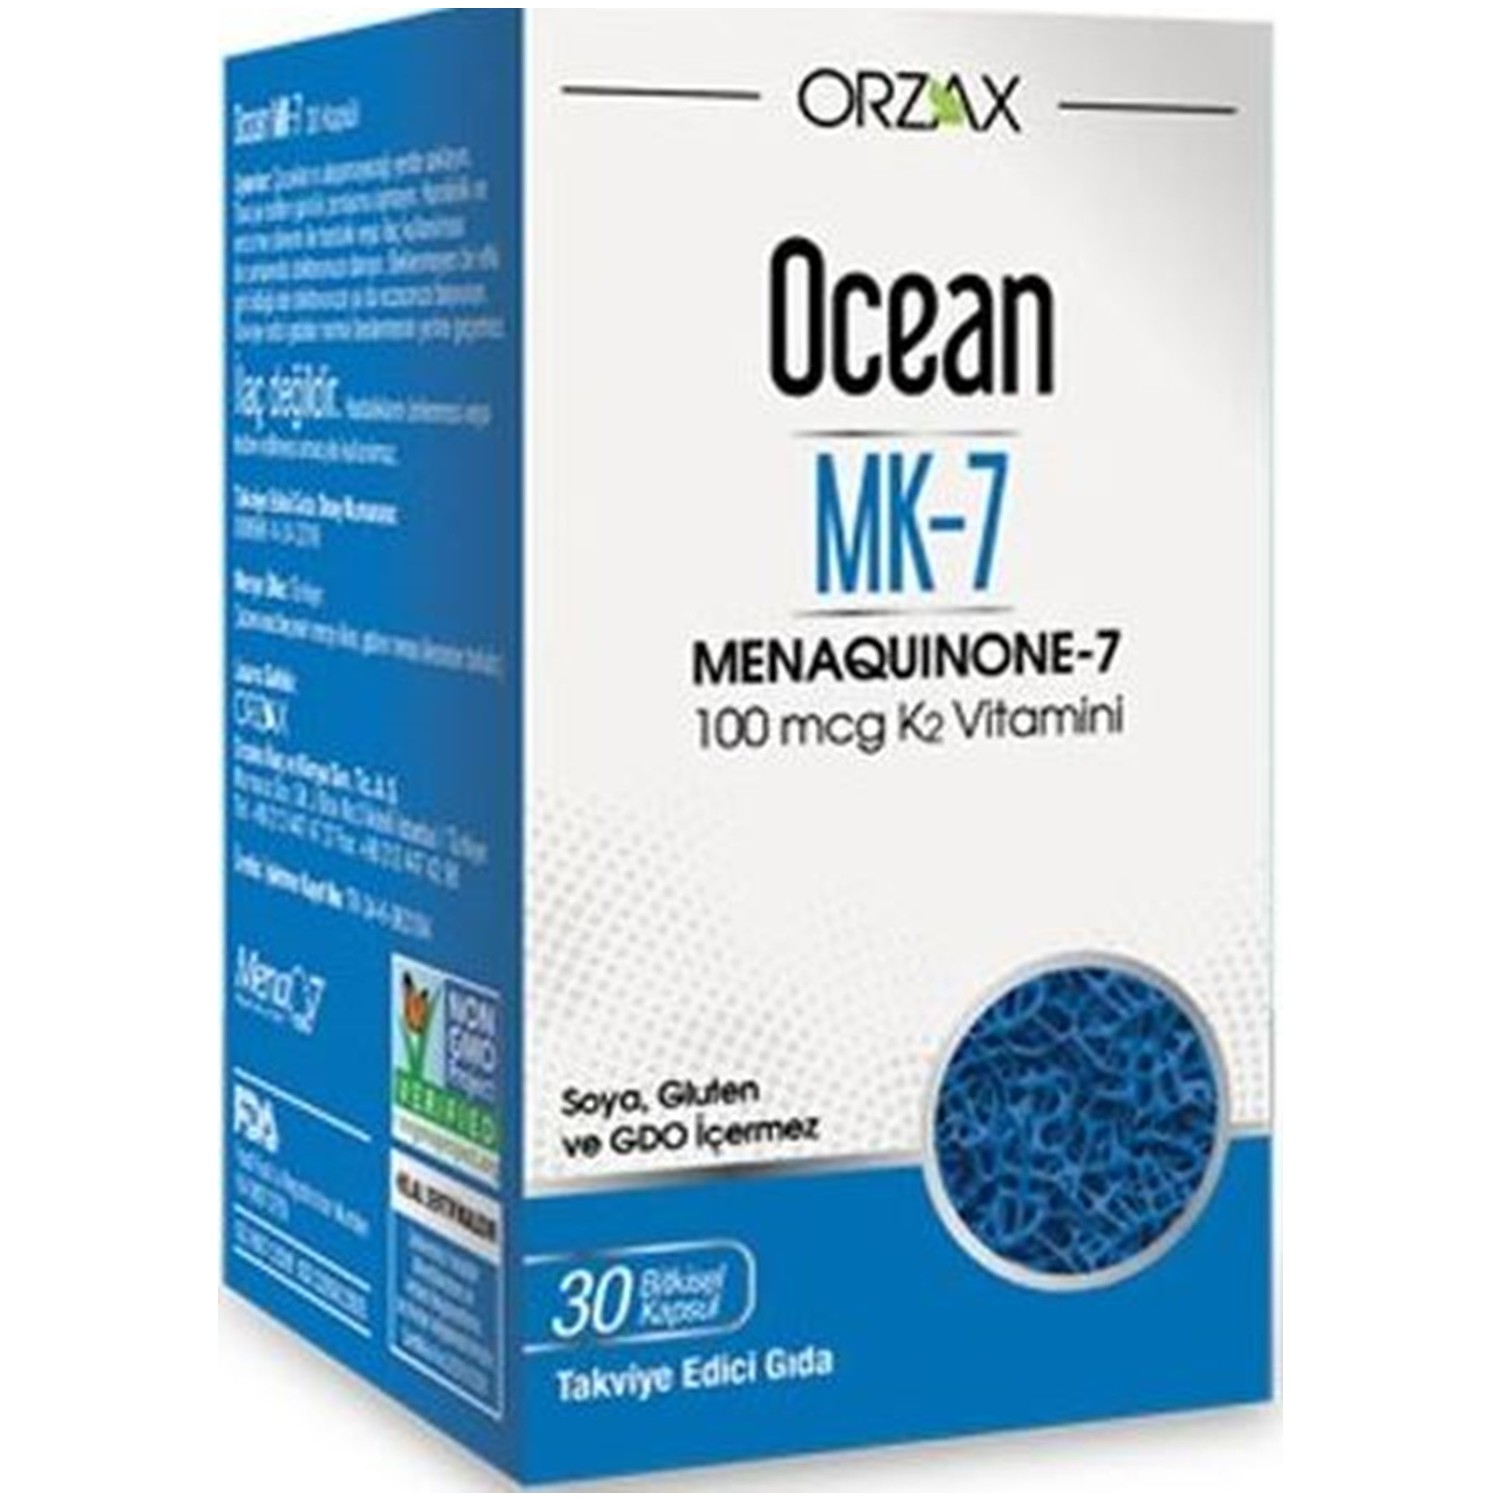 Пищевая добавка Orzax Ocean Mk-7 Vitamin К2 100 мкг, 30 капсул пищевая добавка ocean biotin 60 капсул 5000 мкг